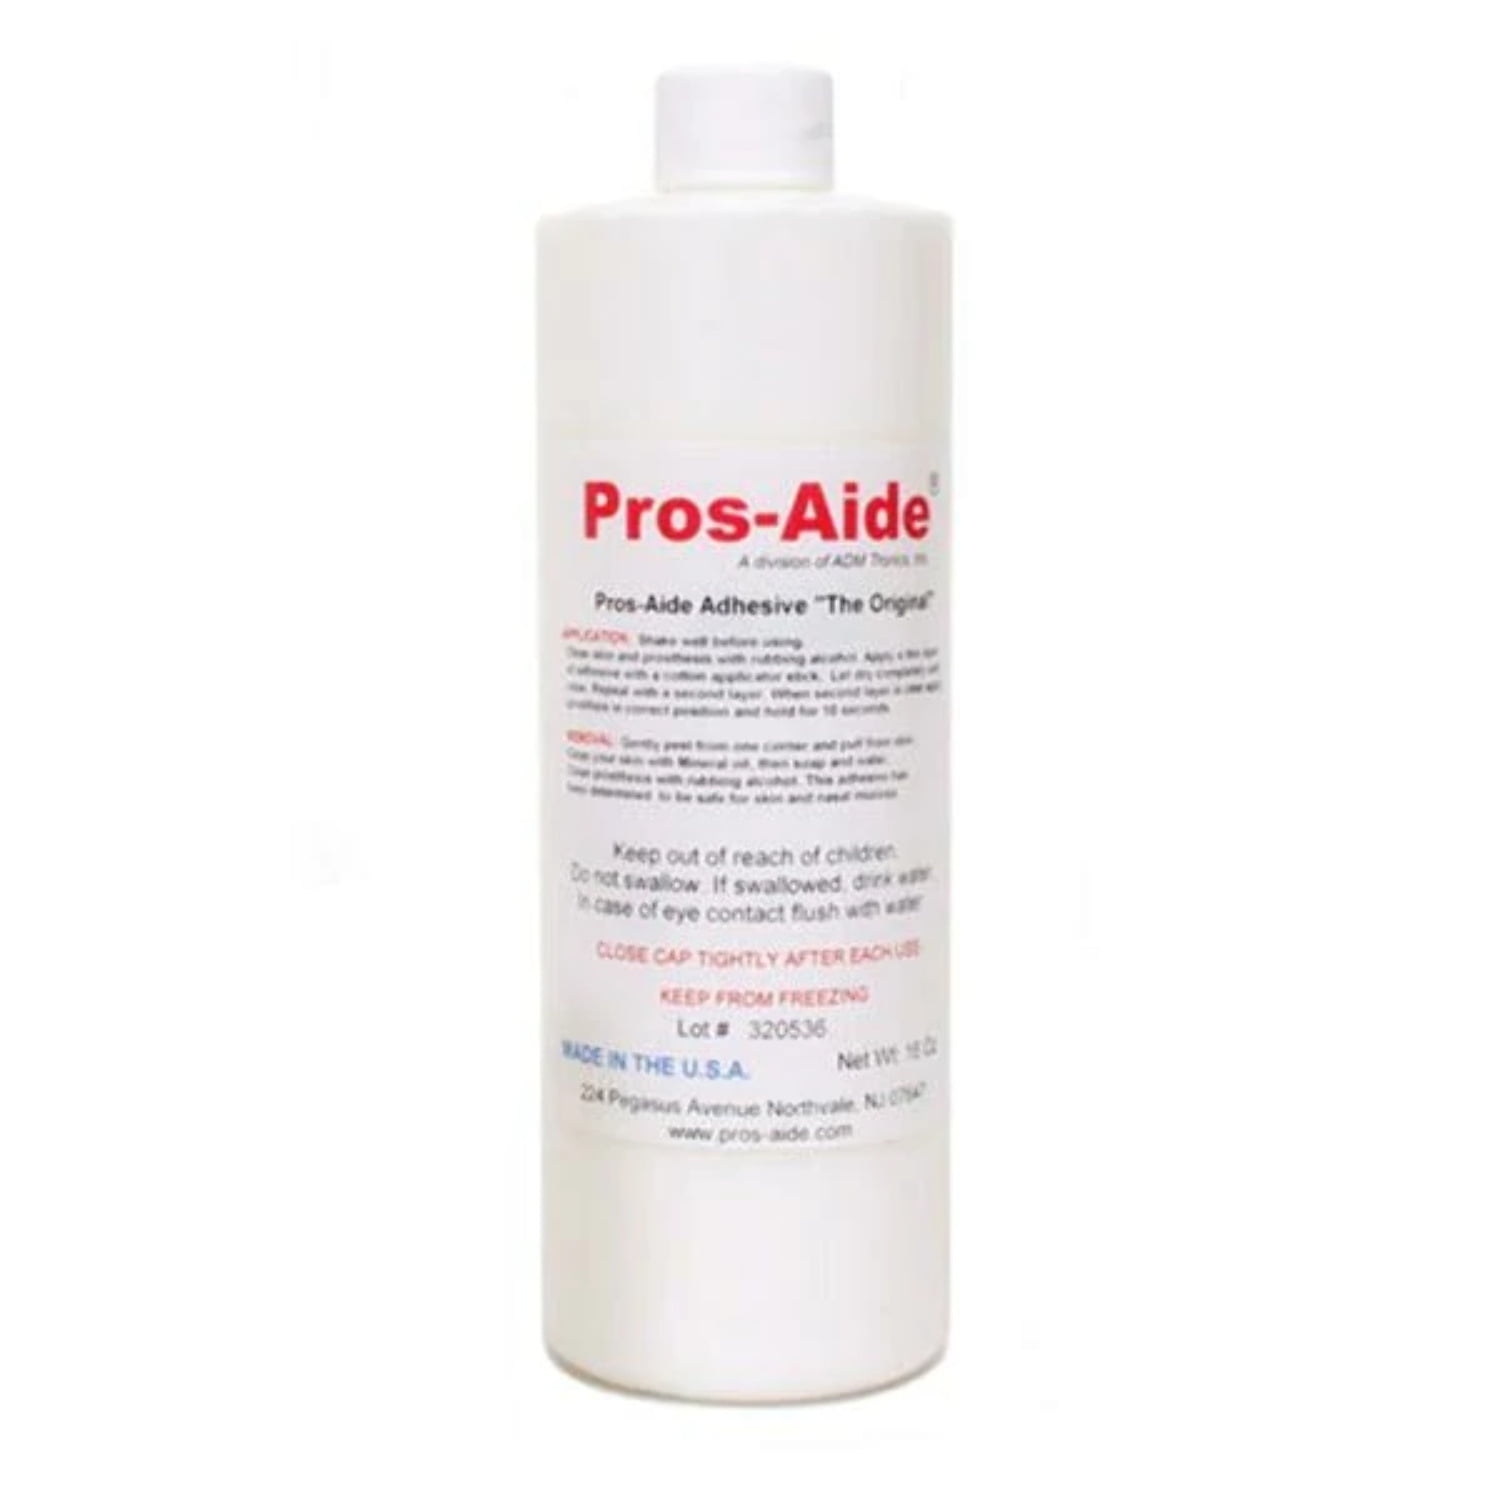 Pros-Aide II Adhesive (1 oz) Sealant 